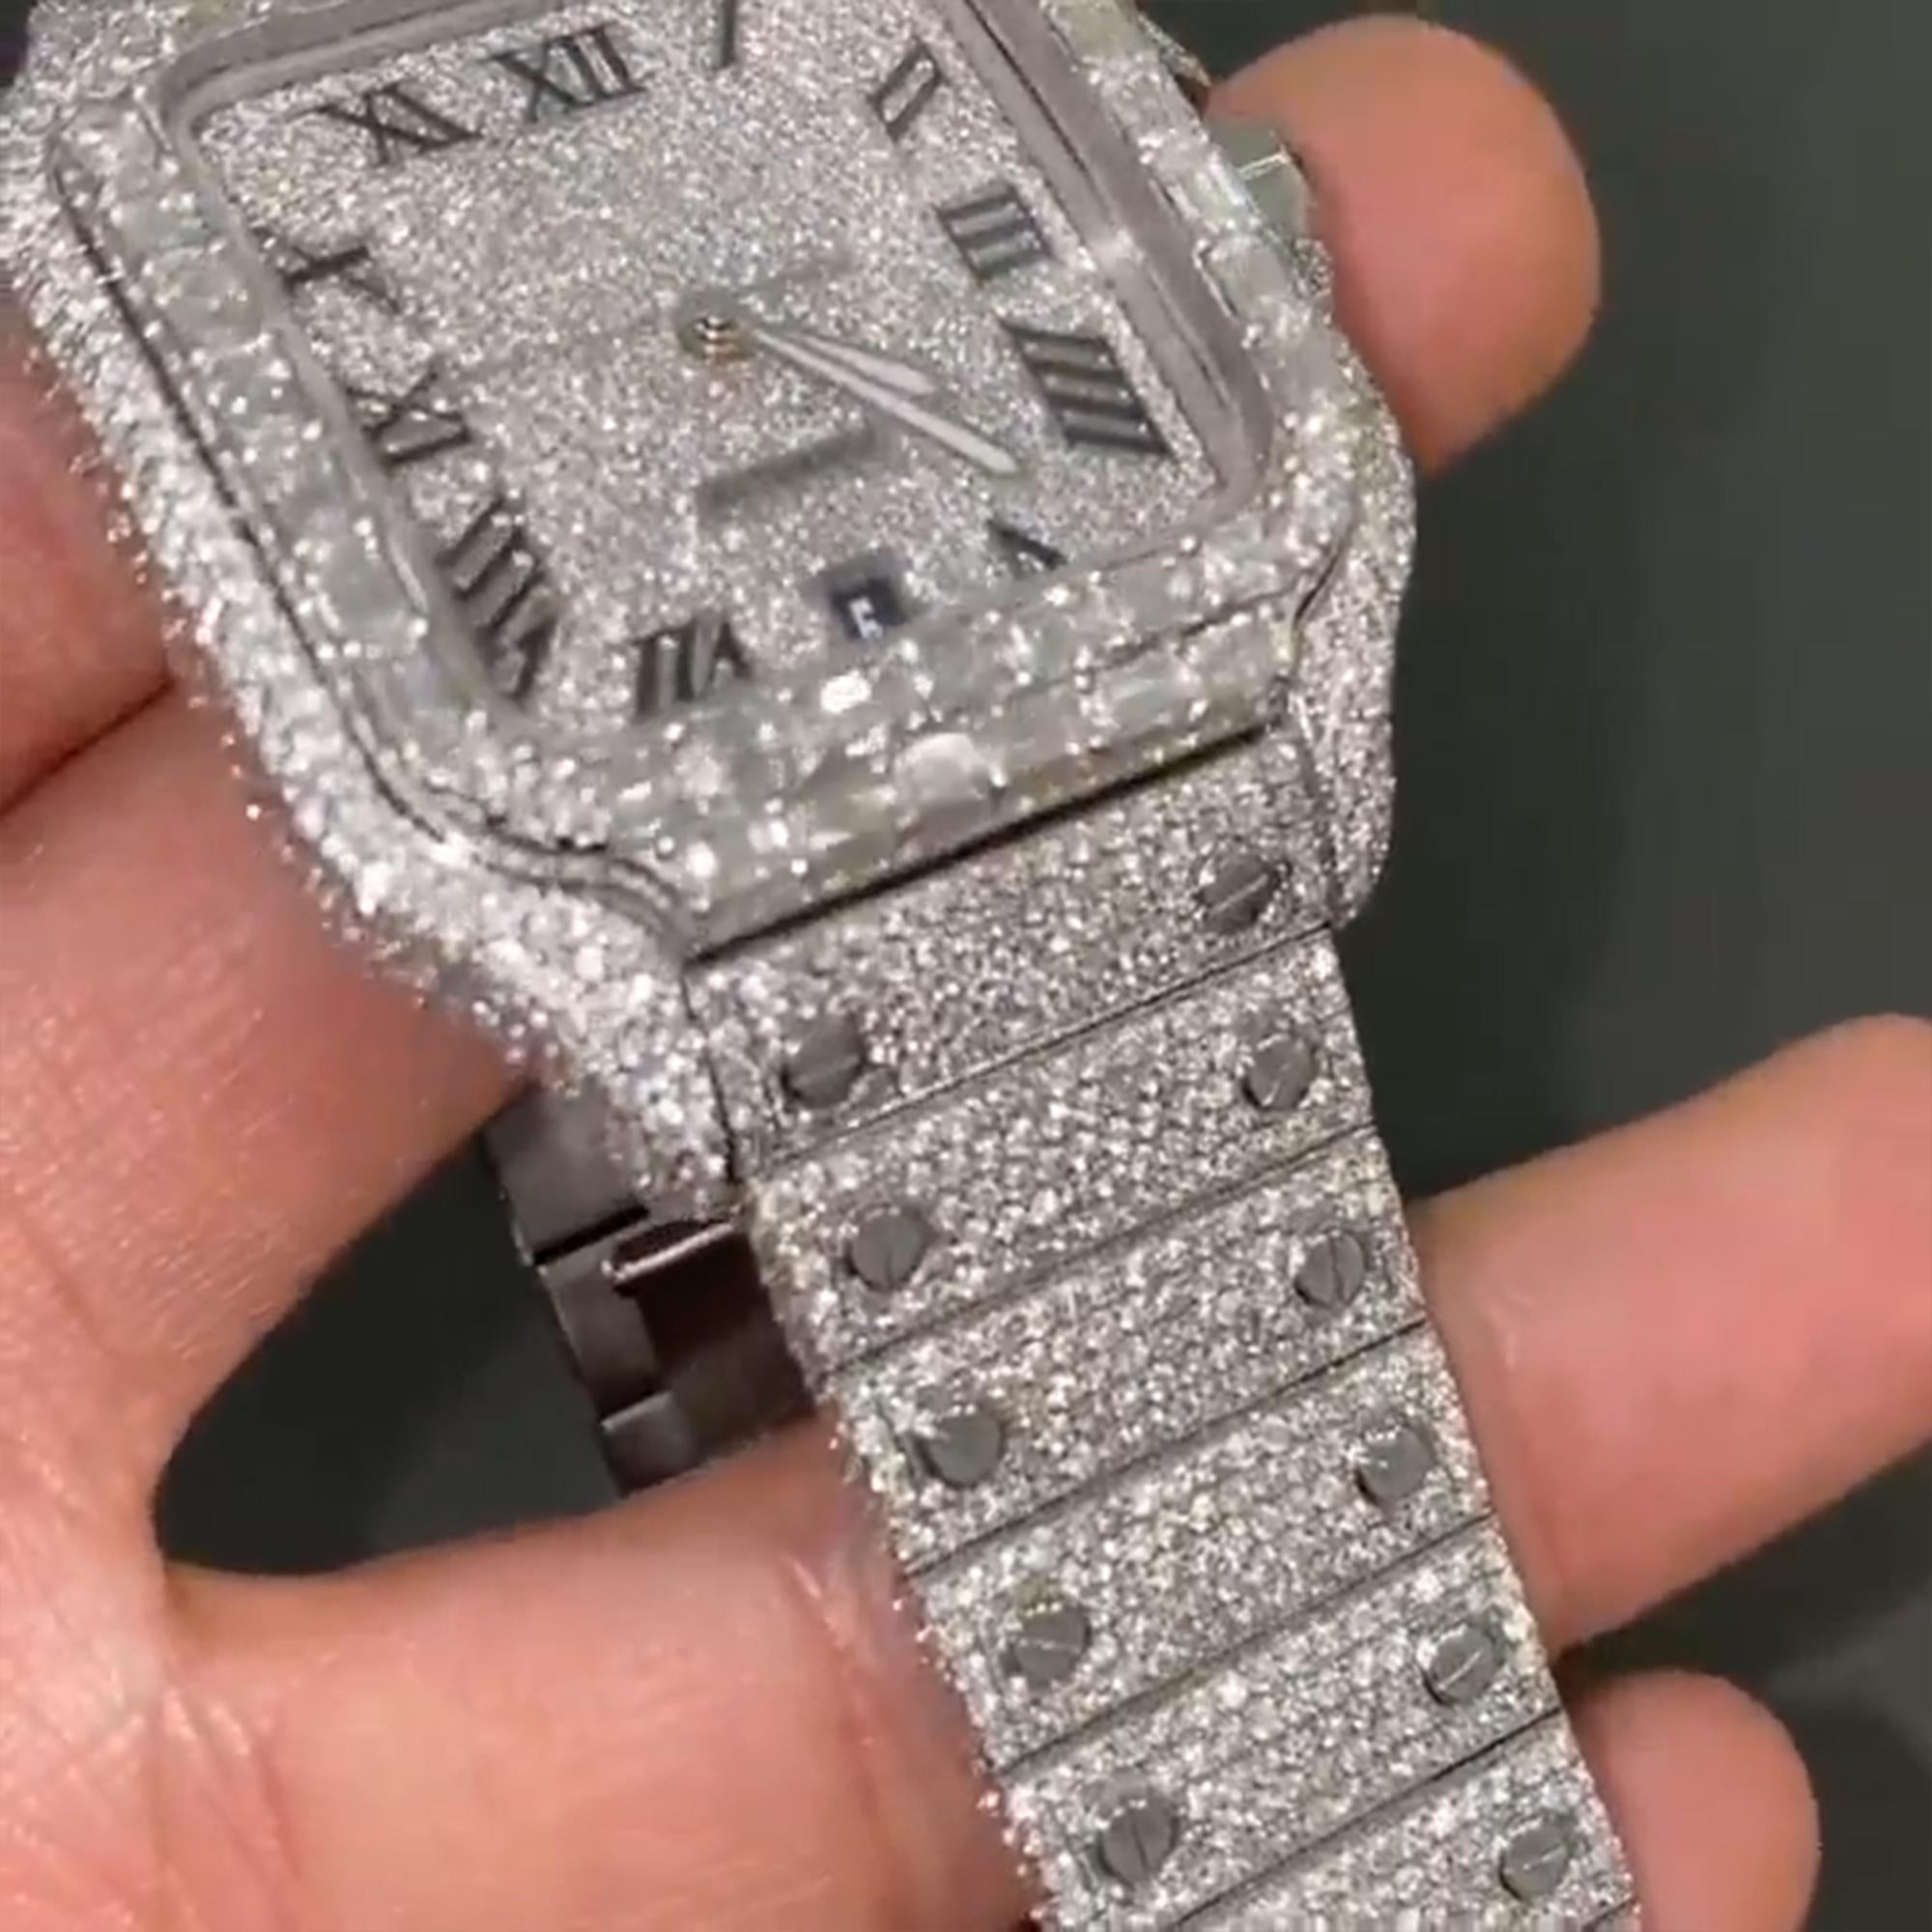 Cartier Santos Moissanite Diamond Watch w 27